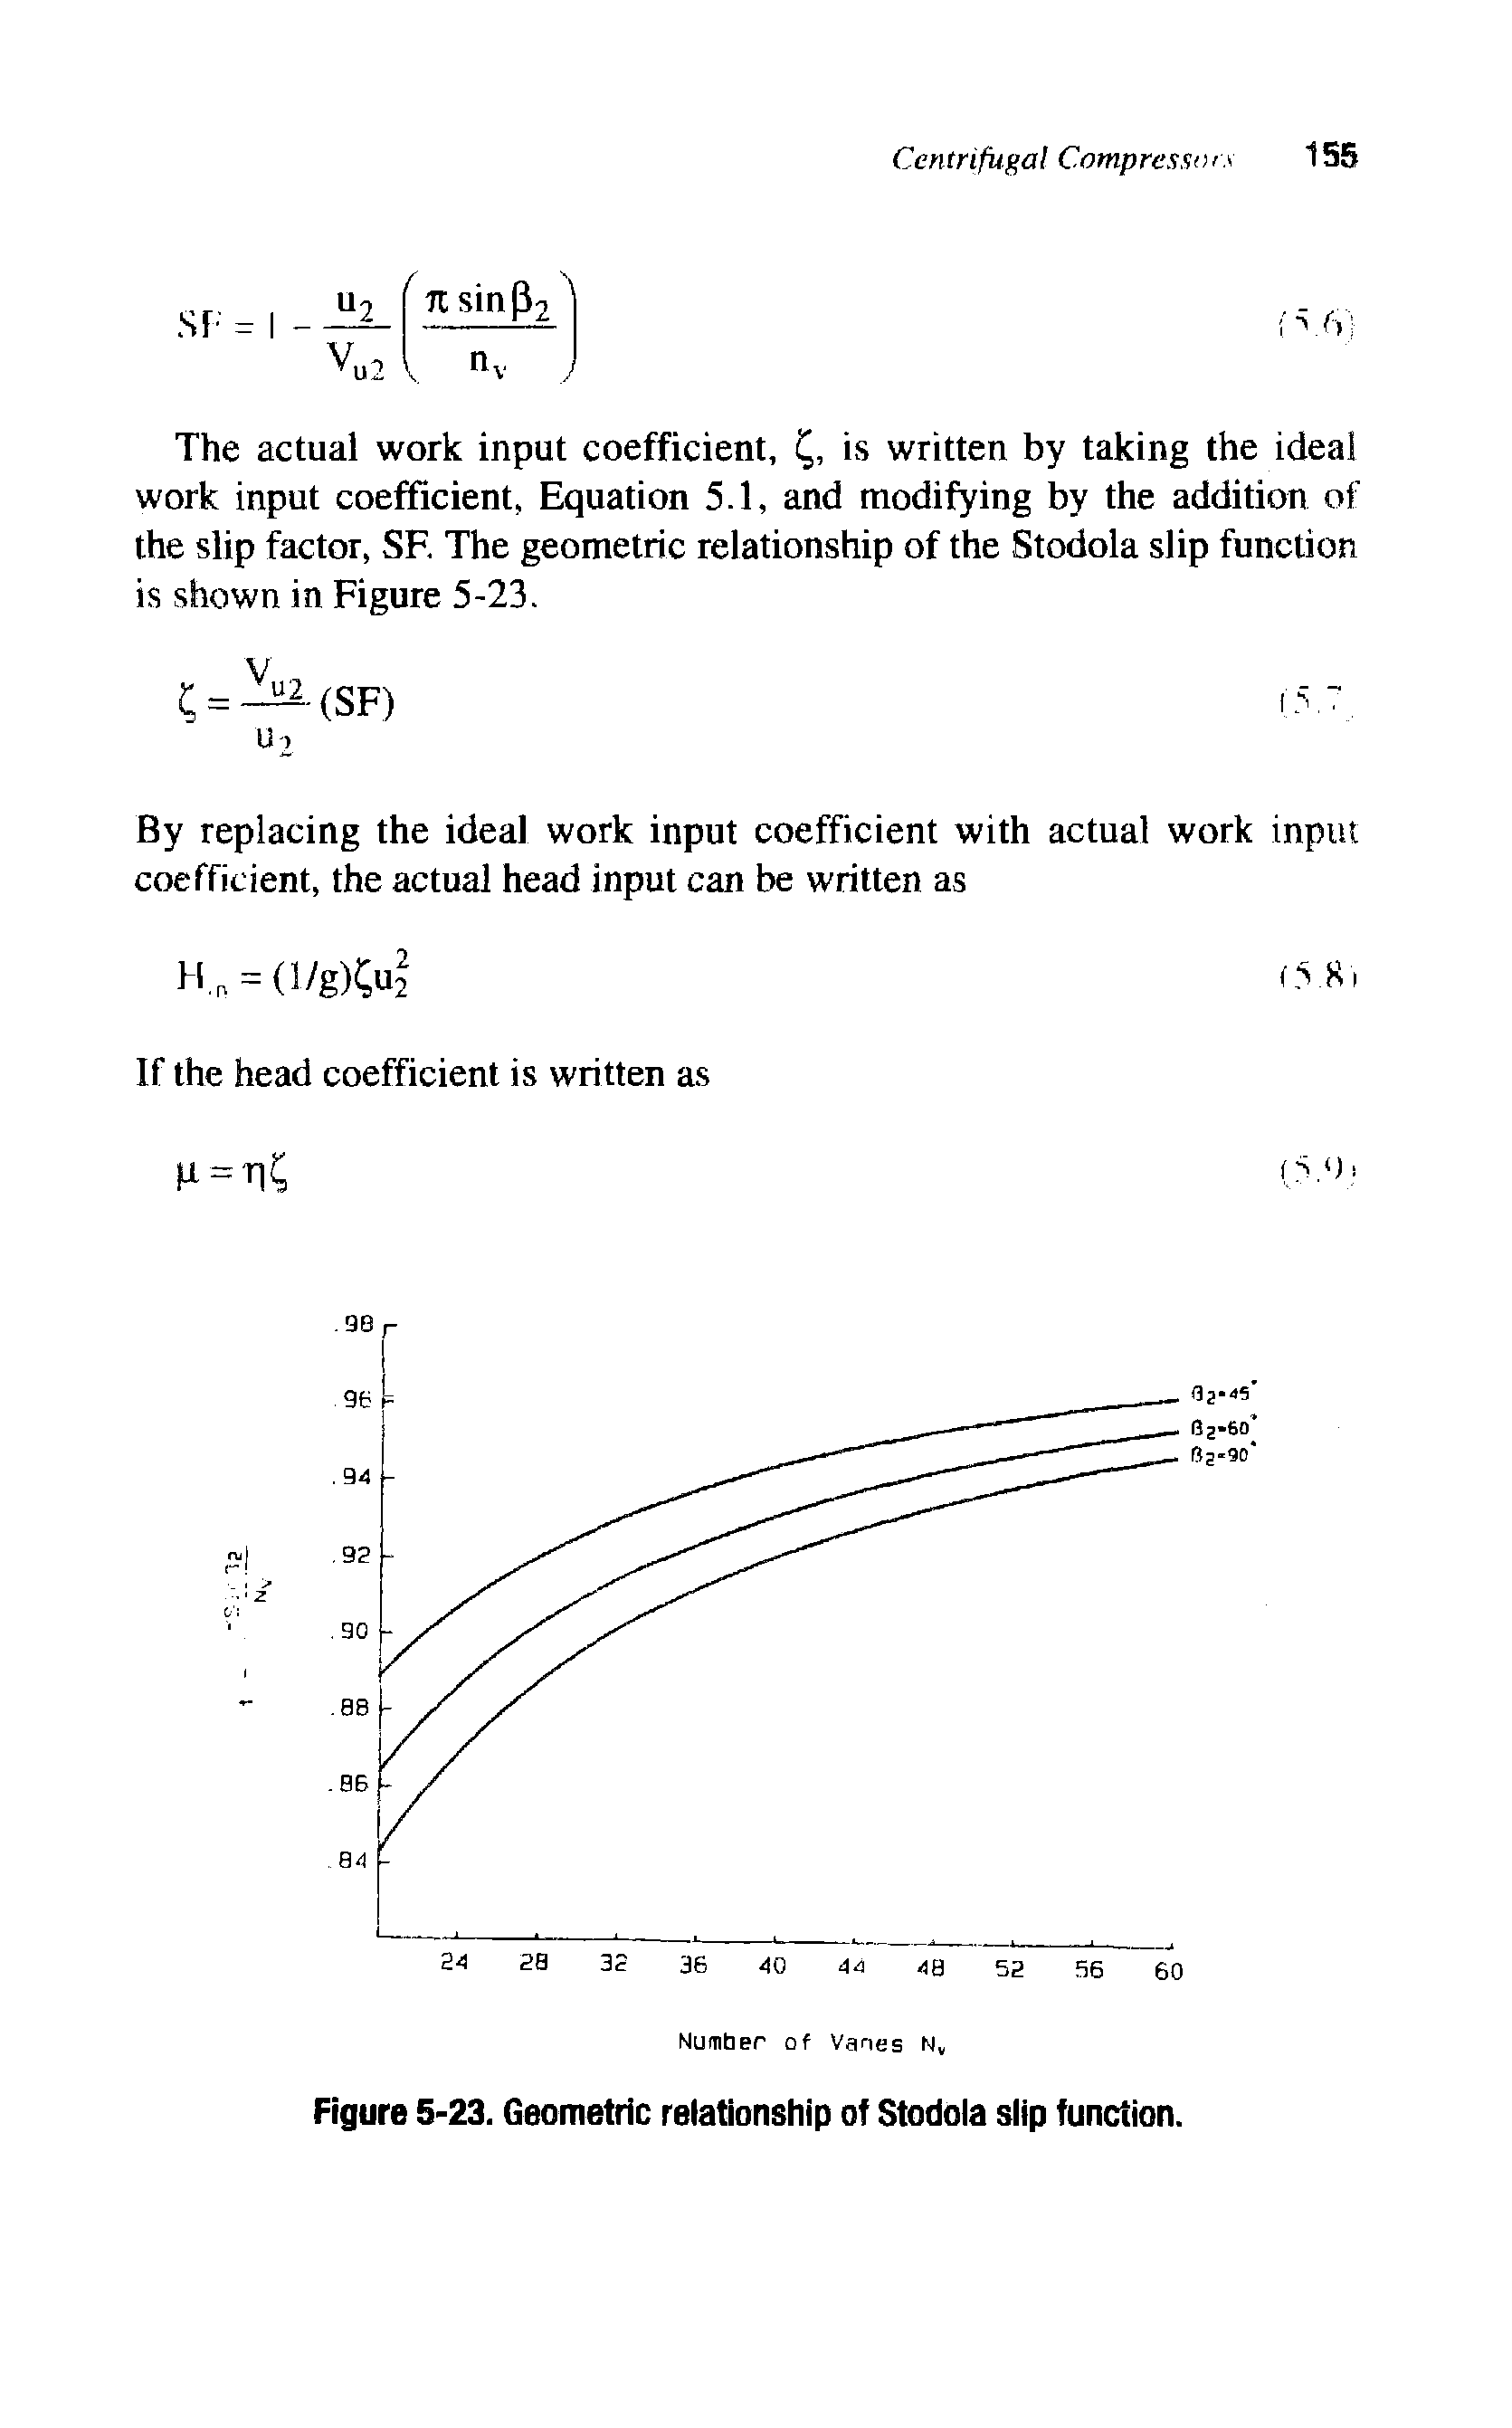 Figure 5-23. Geometric relationship of Stodola slip function.